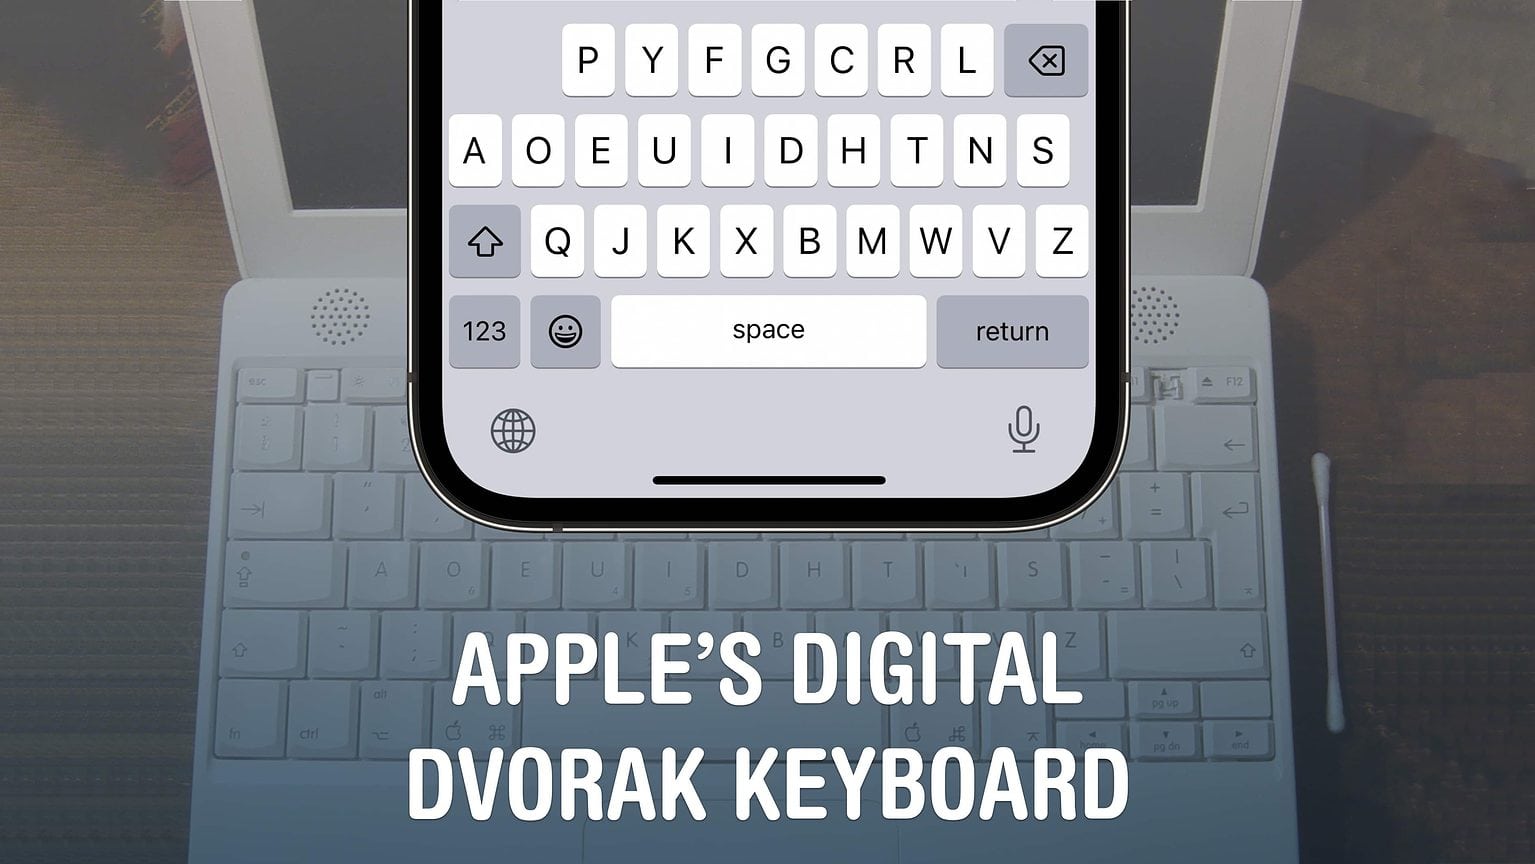 Apple’s digital Dvorak keyboard.